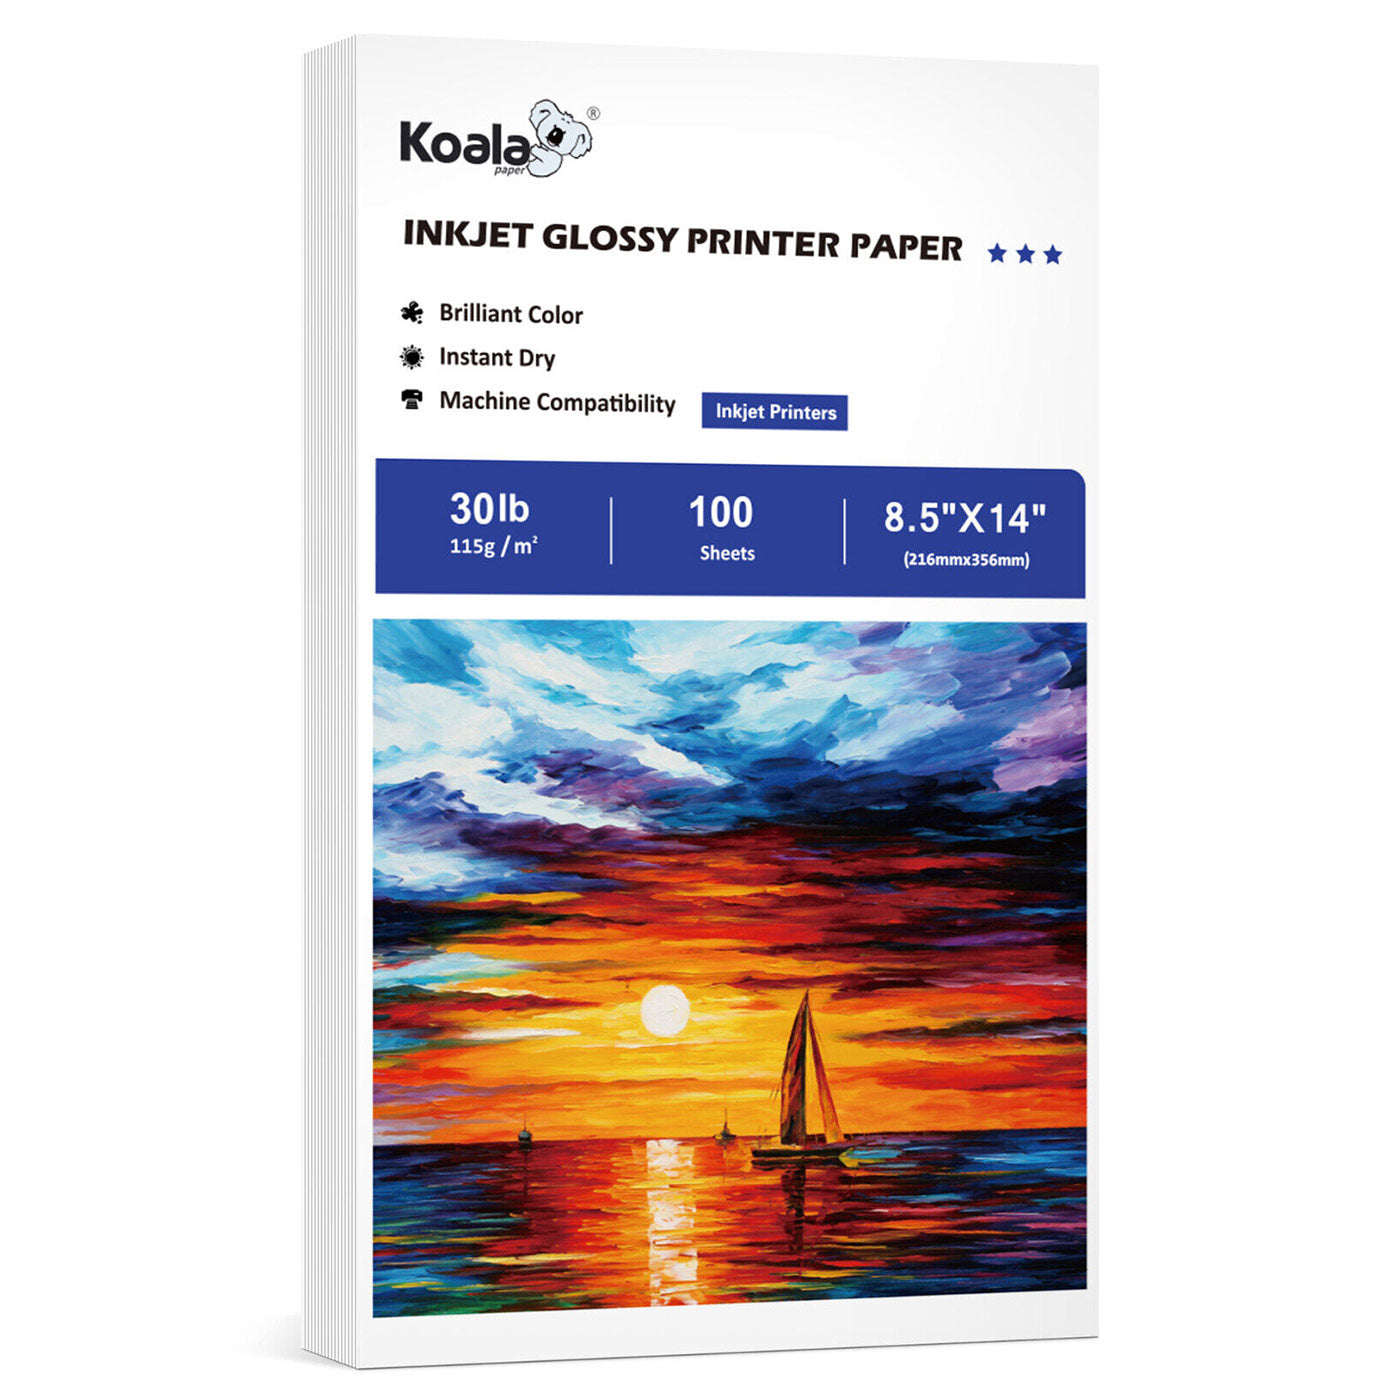 Koala Inkjet Glossy Photo Paper 115gsm 100 Sheets Used For Inkjet Prin ...